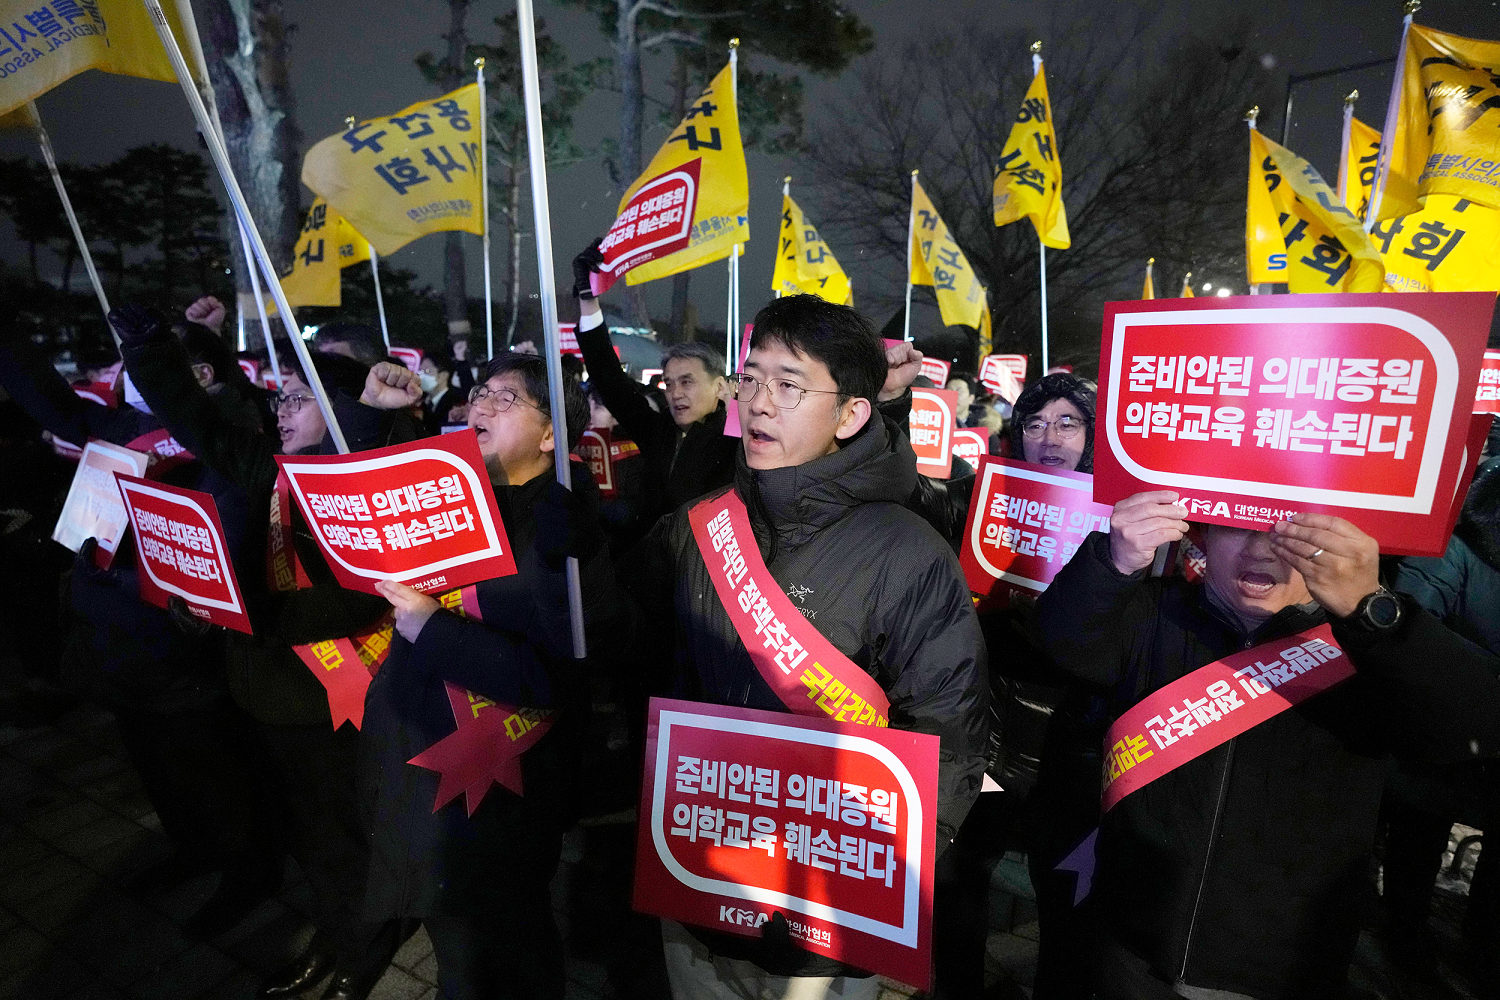 South Korea health alert raised to ‘severe’ over doctors walkout